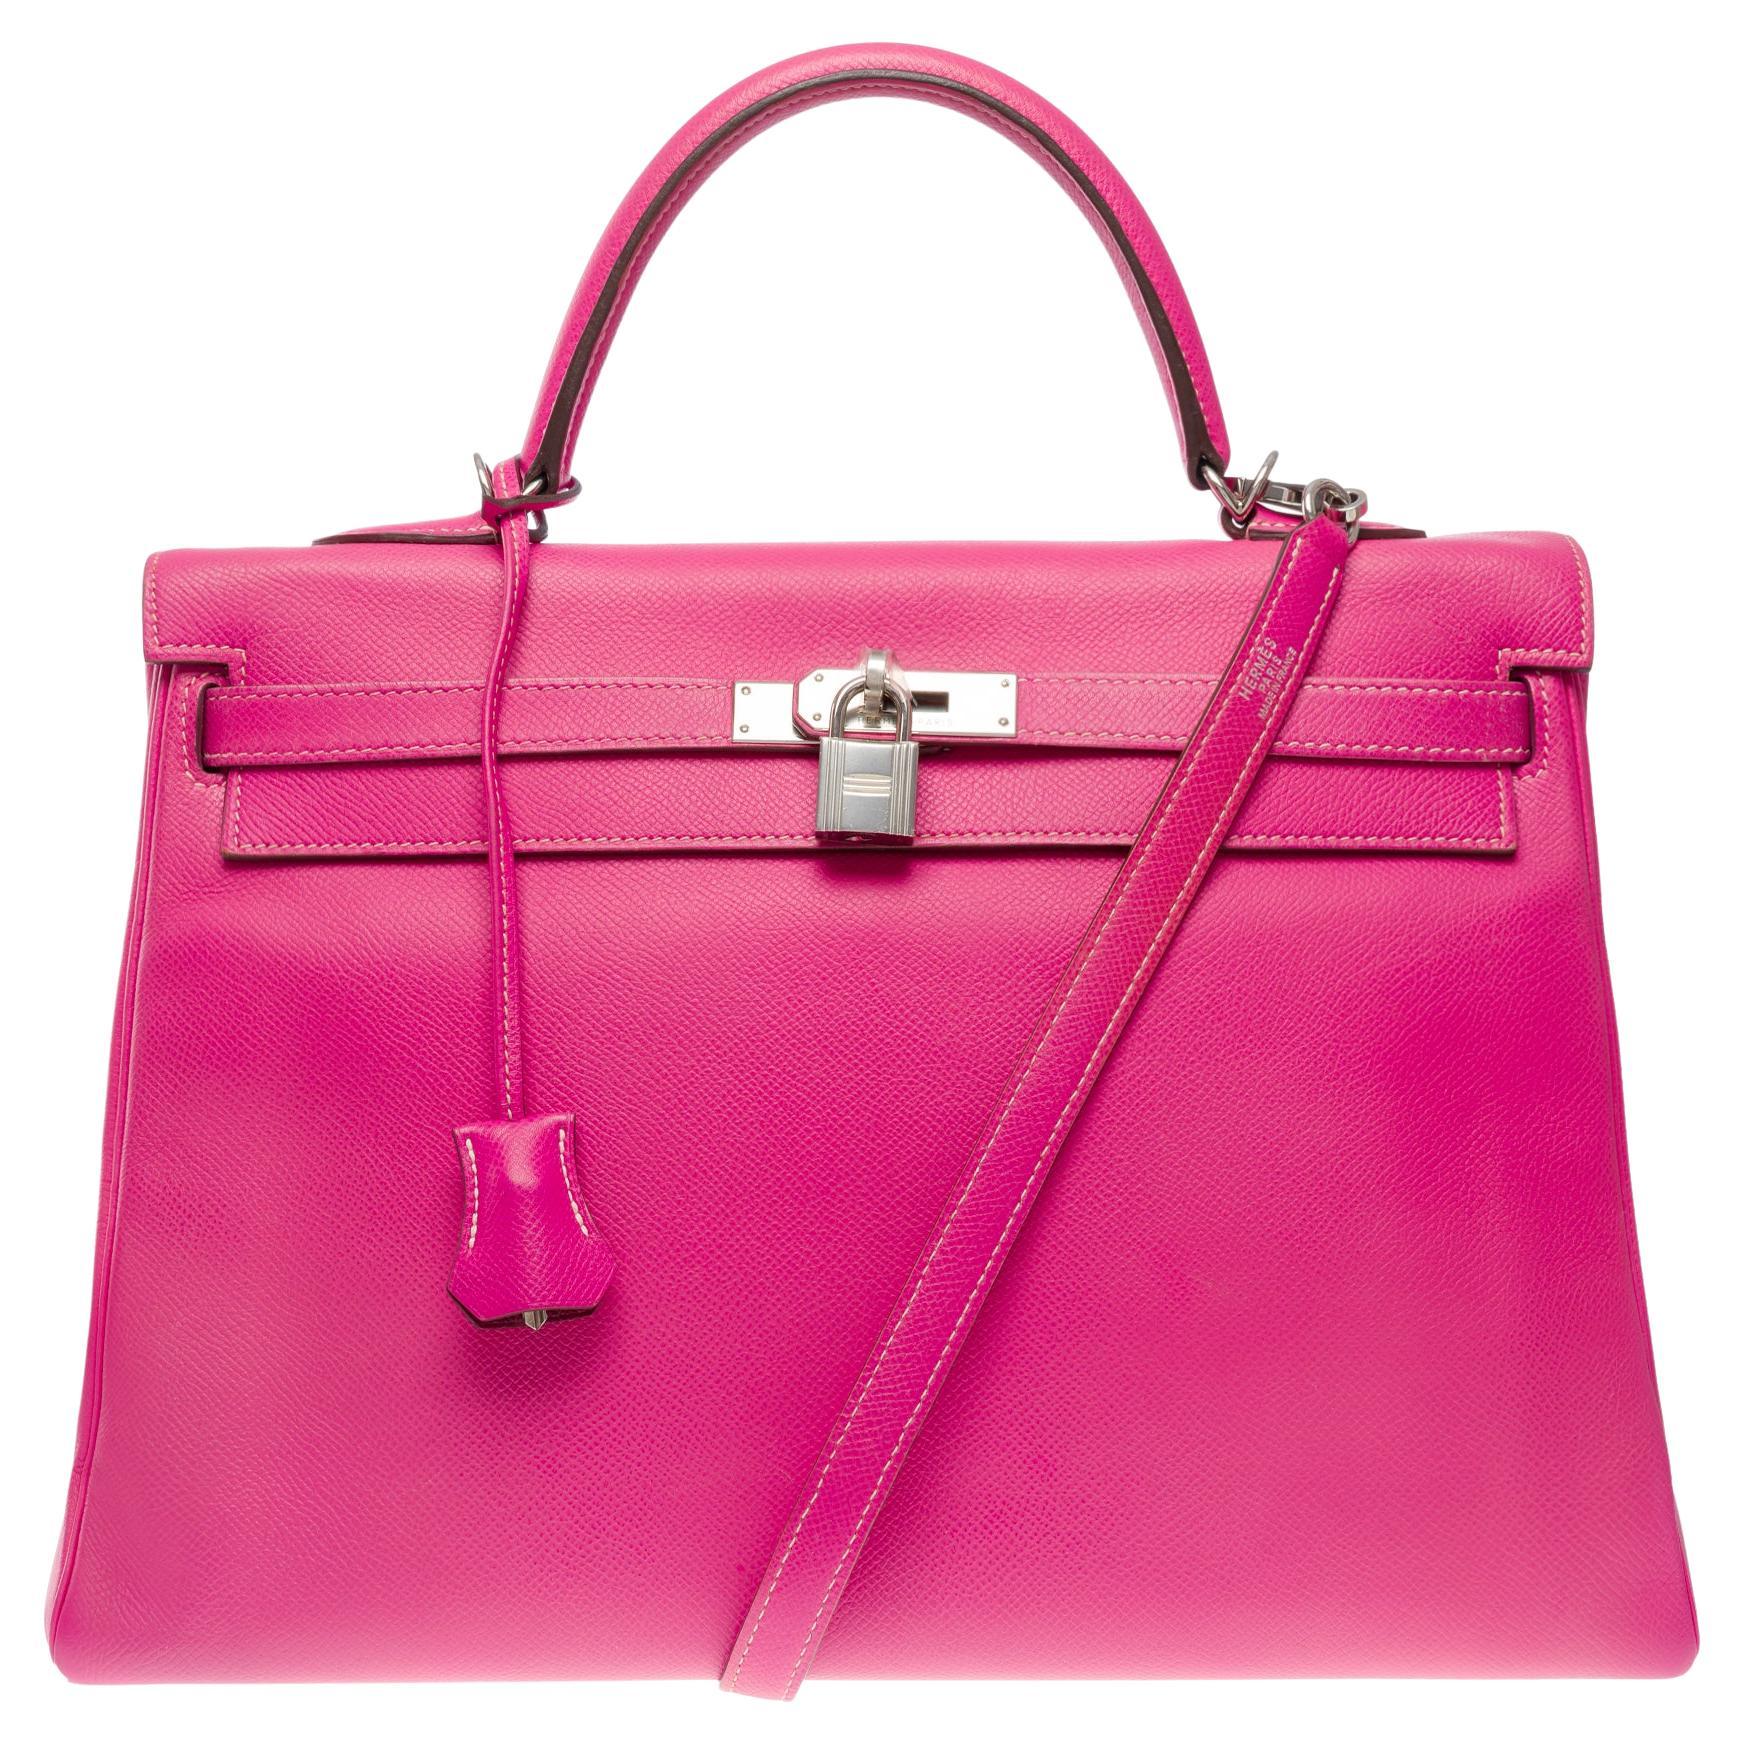 Candy Edition Hermès Kelly 35 retourne handbag strap in Pink Epsom leather, SHW